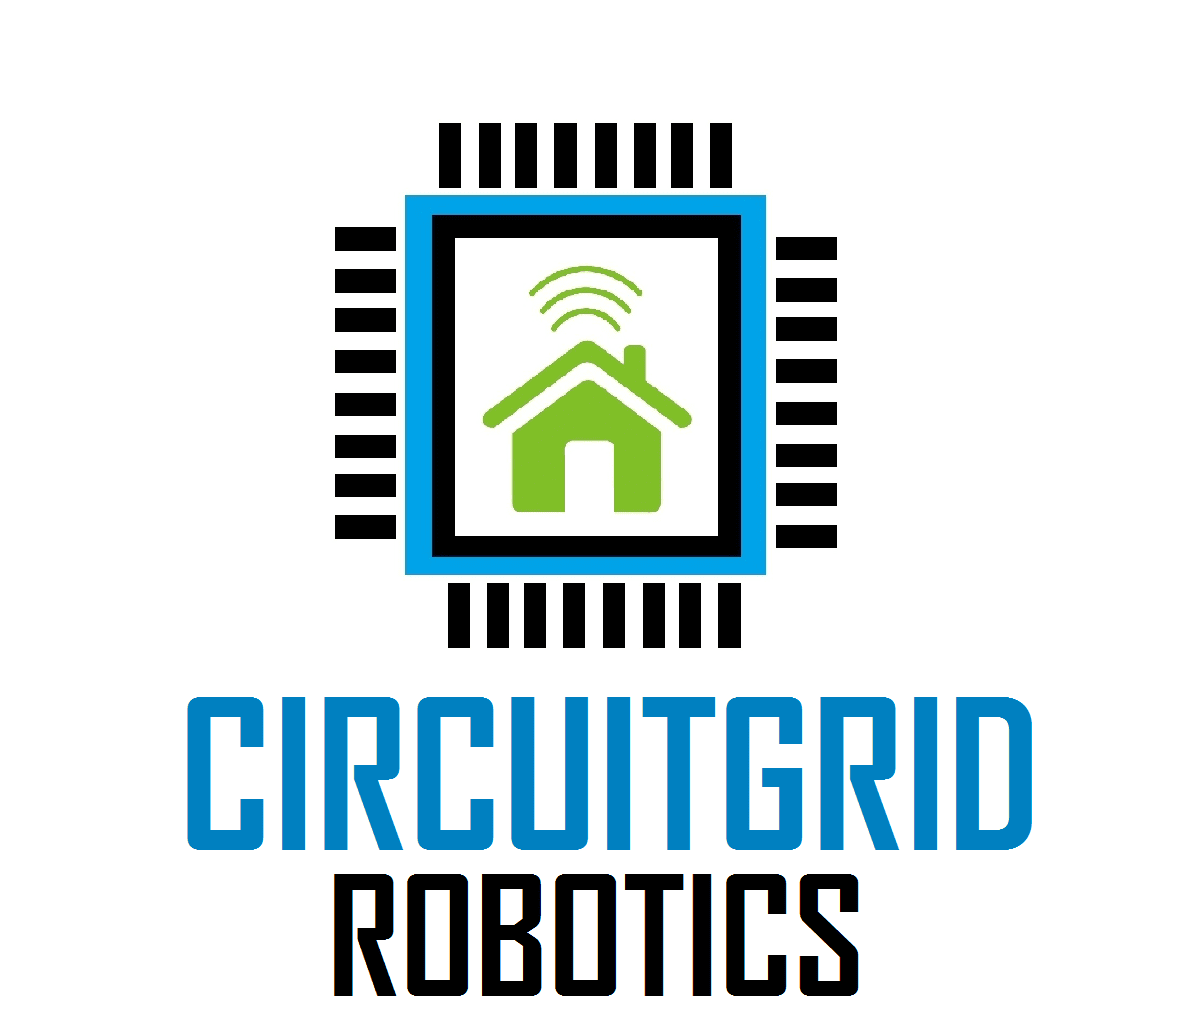 CIRCUITGRID ROBOTICS